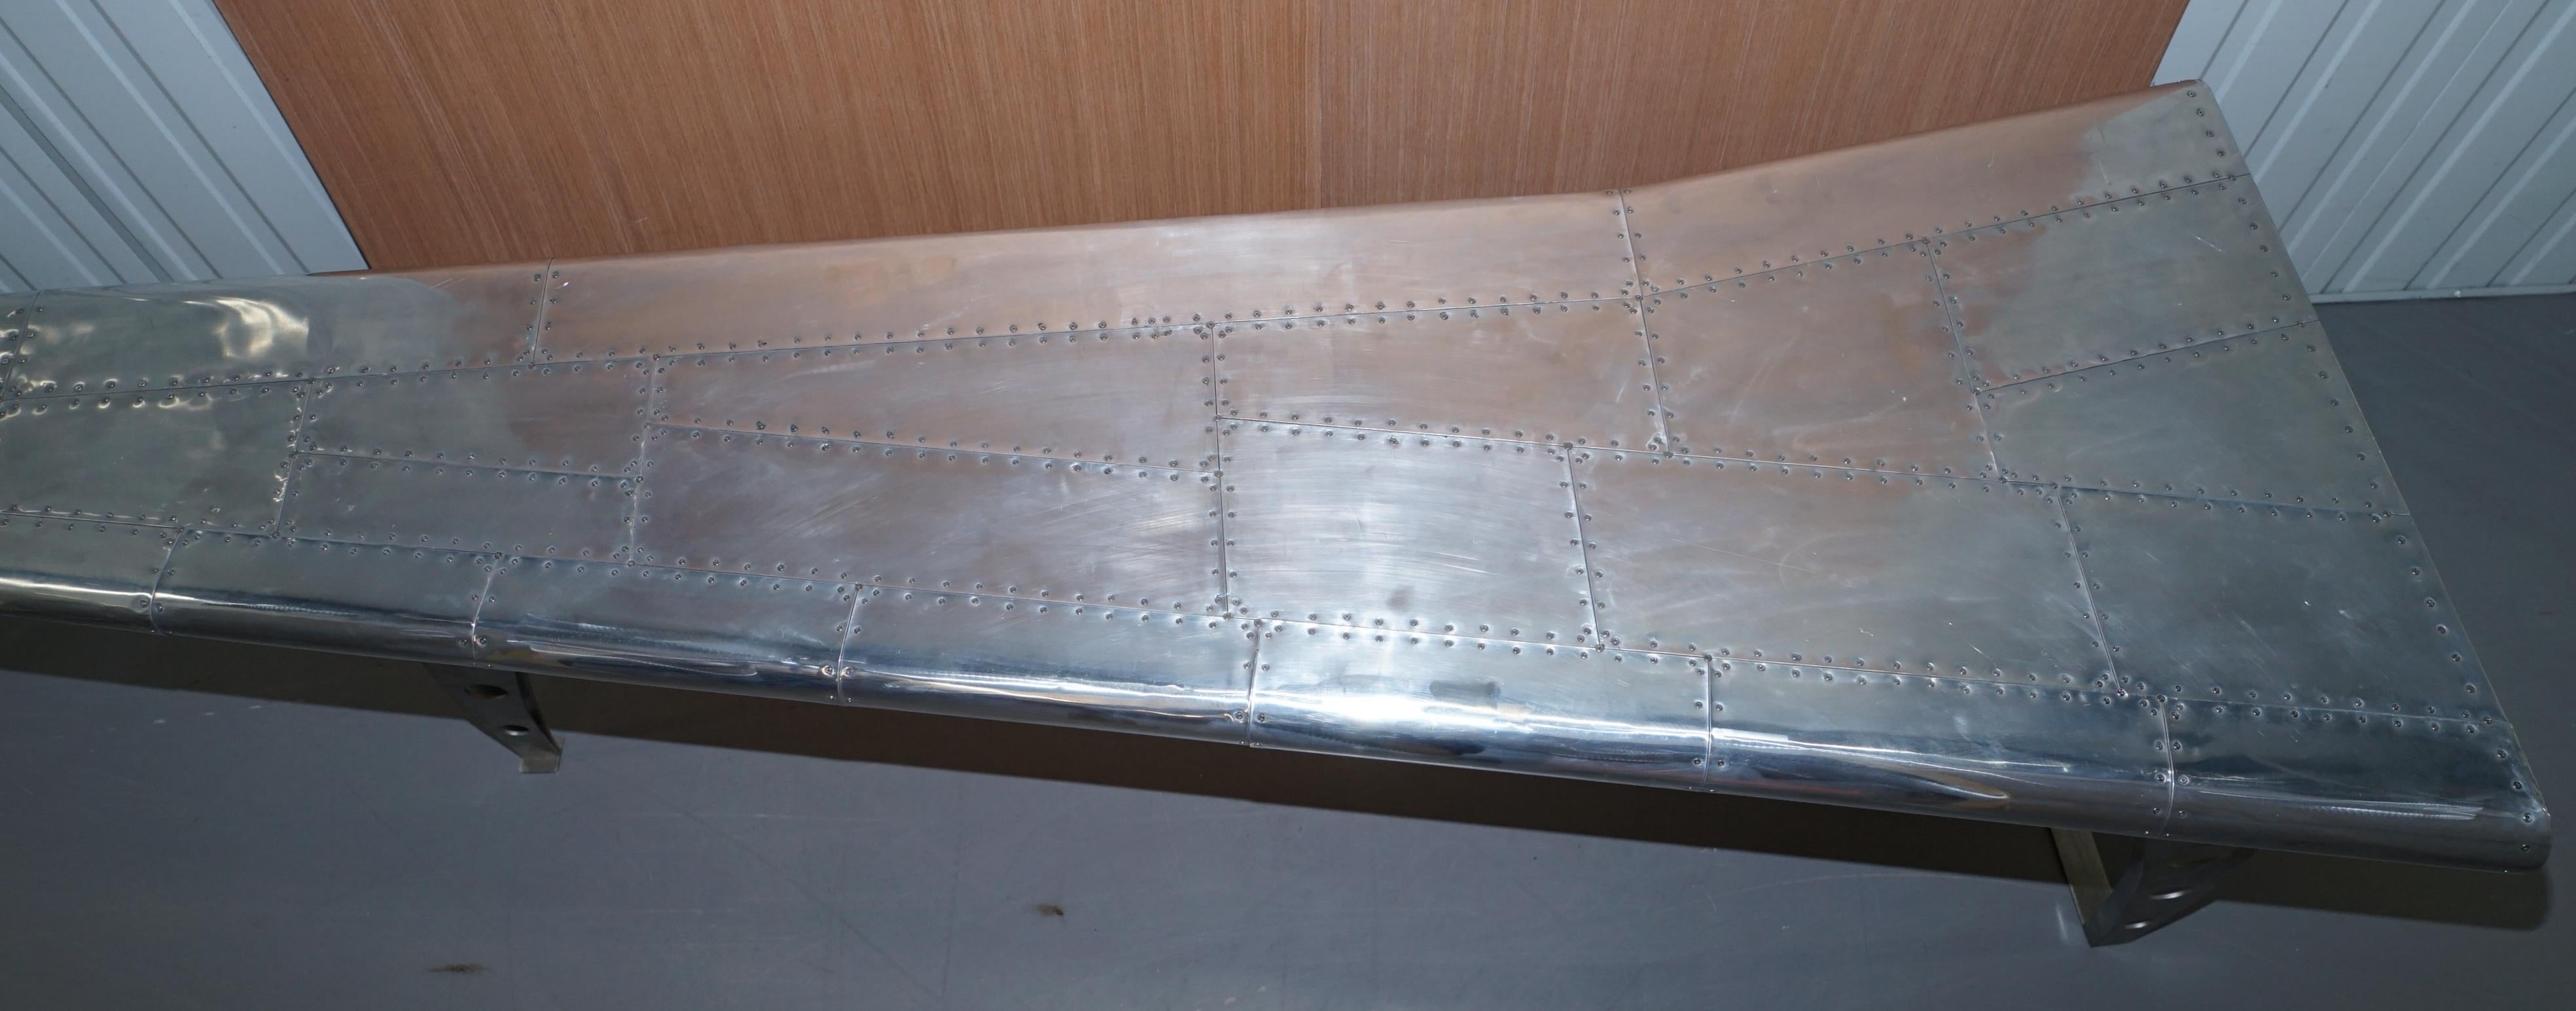 1 of 2 Stunning Aluminium Aeroplane Wing Desks or Writing Tables Large Sized 1